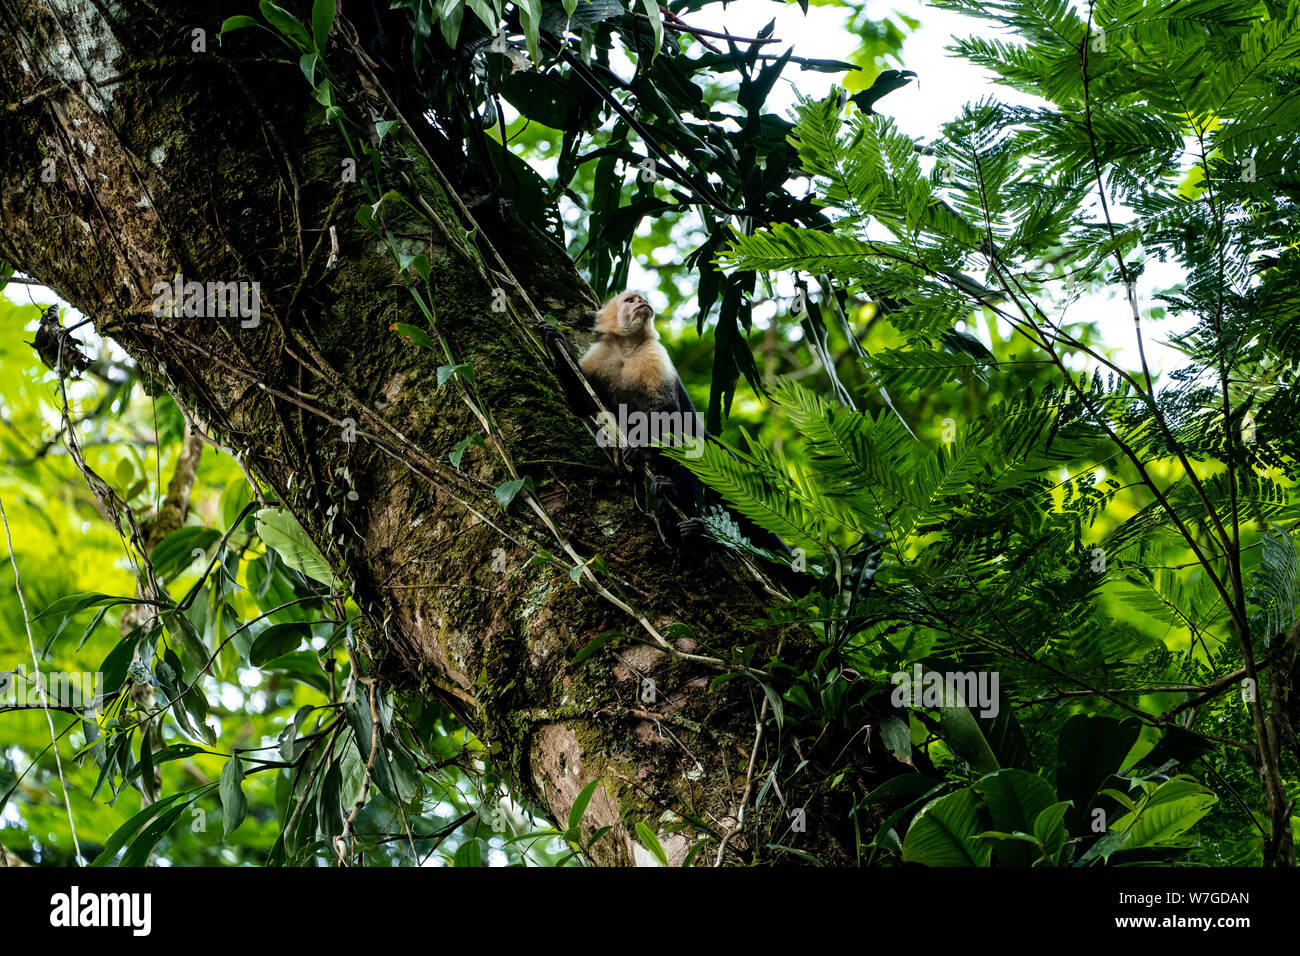 Capuchino cara blanca colombiana Foto de stock